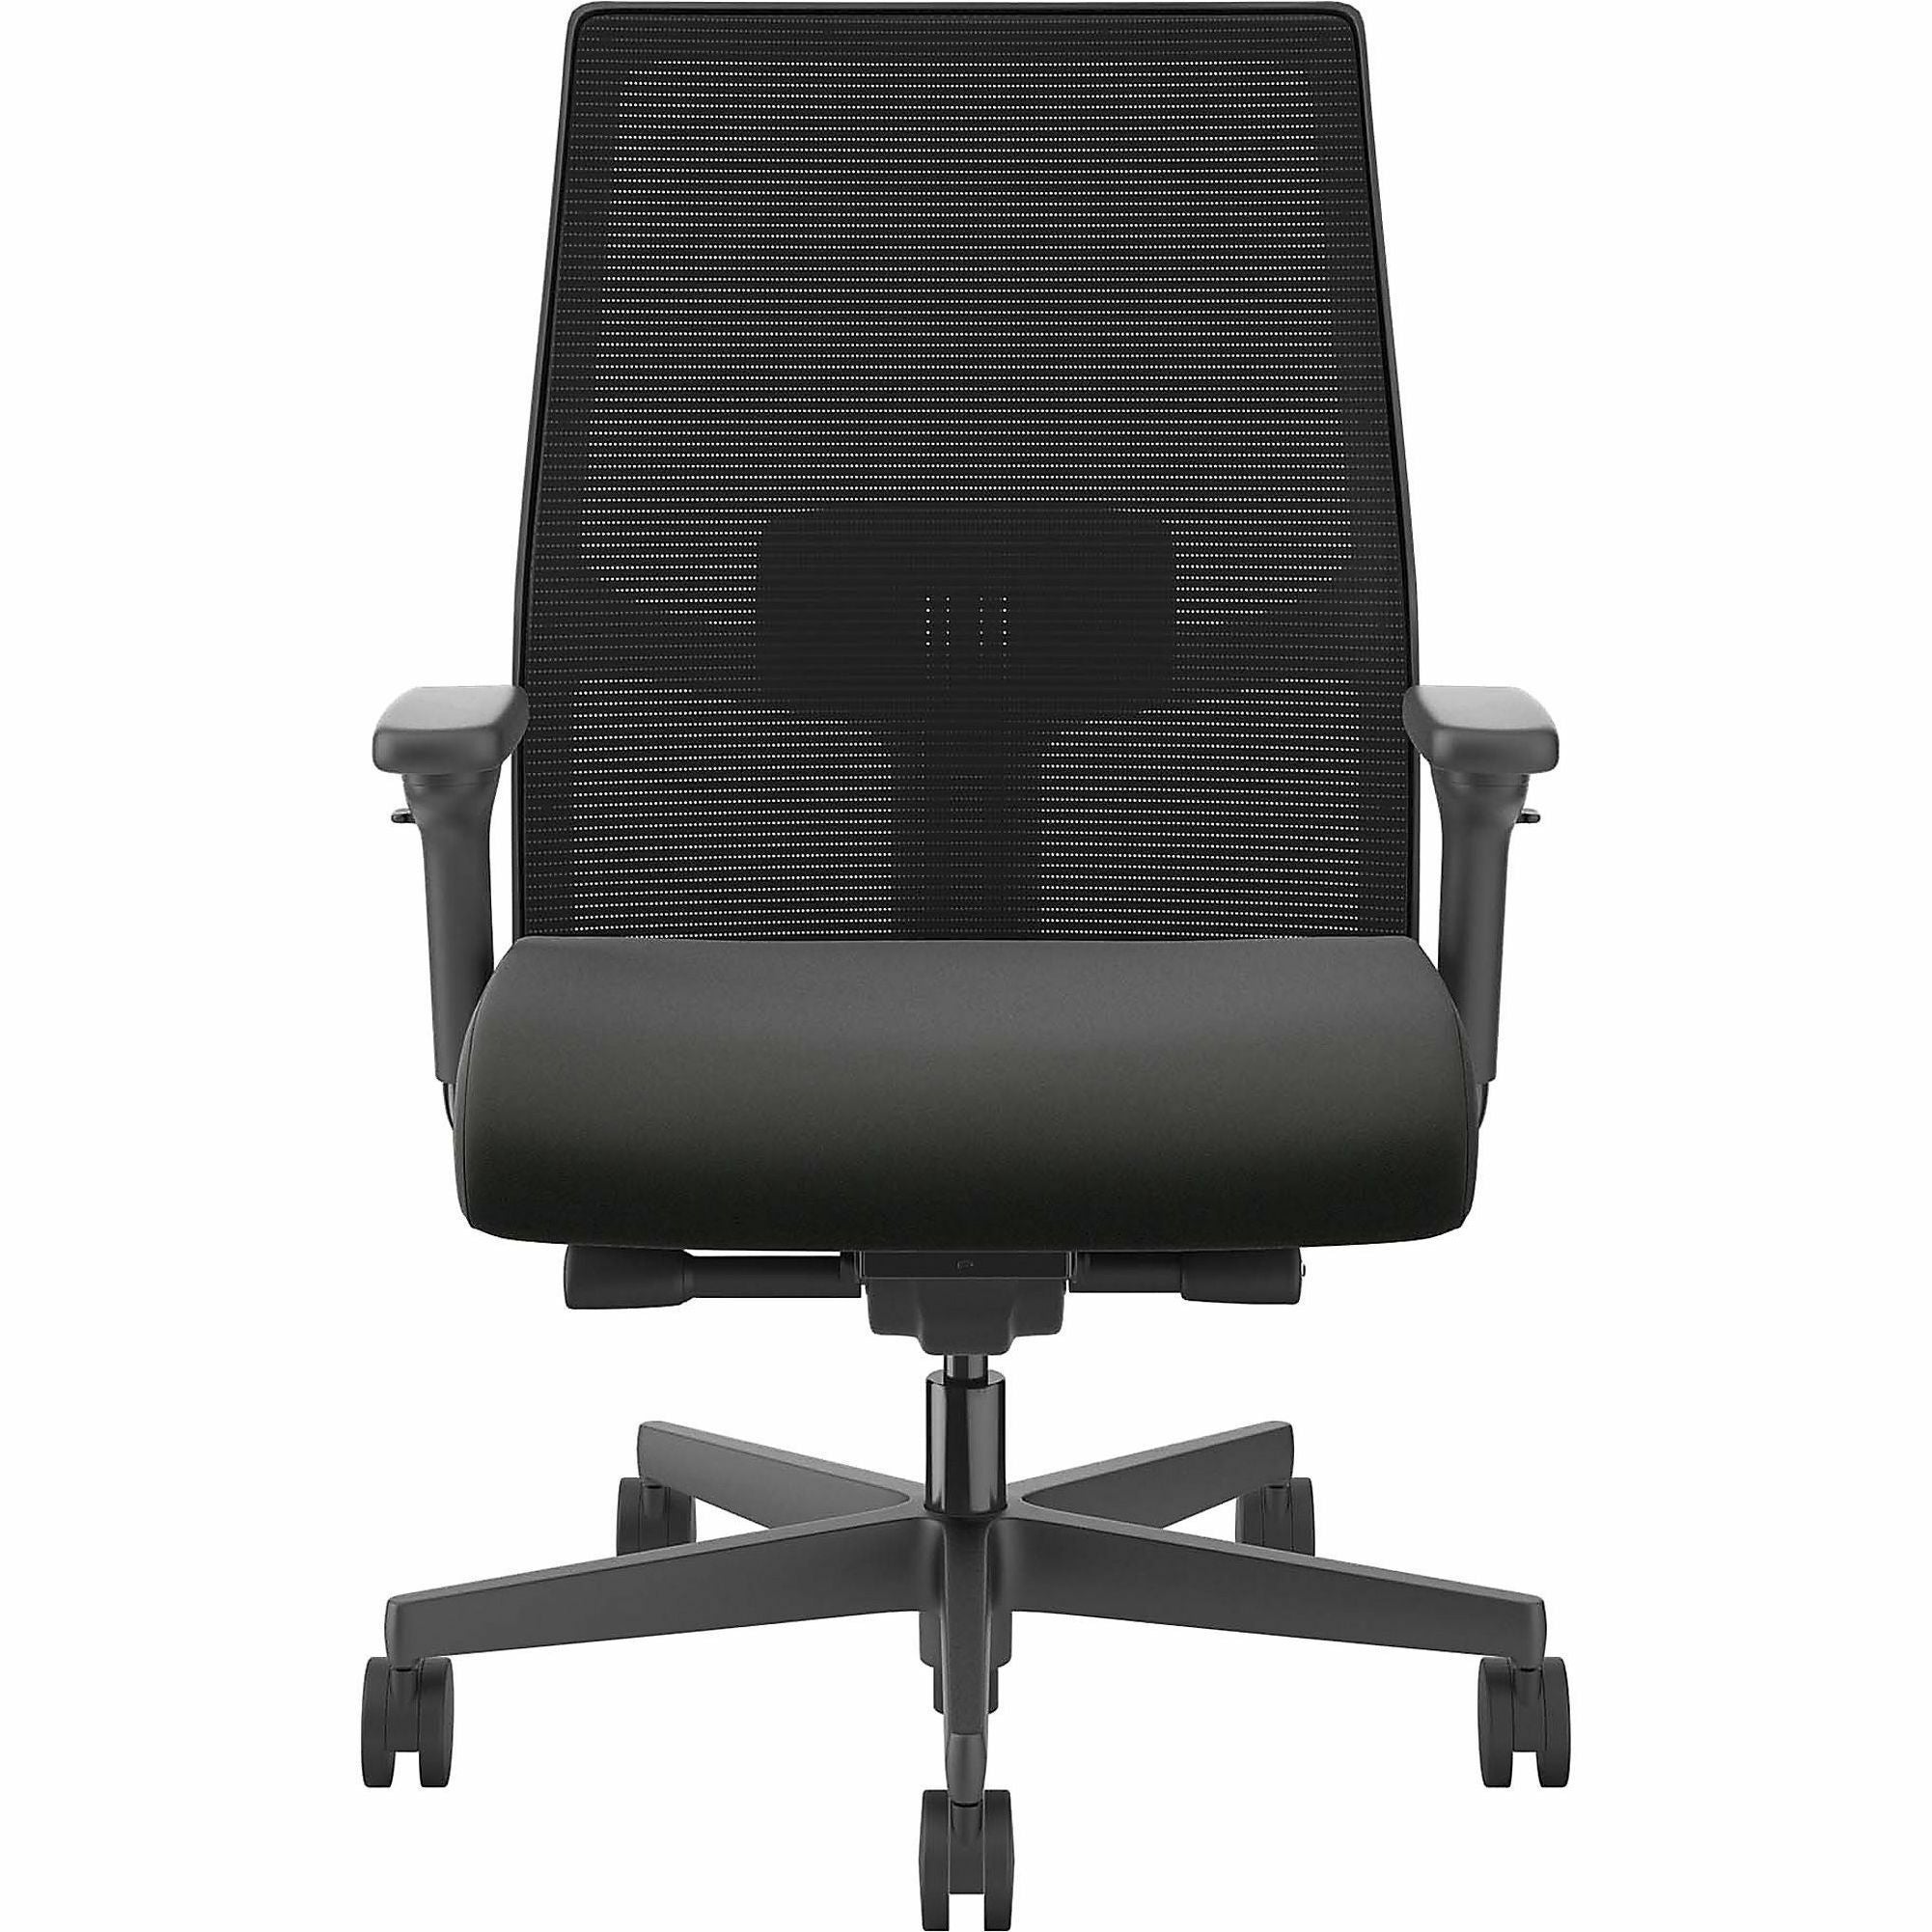 hon-ignition-20-mid-back-big-&-tall-task-chair-black-foam-seat-black-back-black-frame-mid-back-5-star-base-armrest-1-each_honi2btvmu10btn - 2